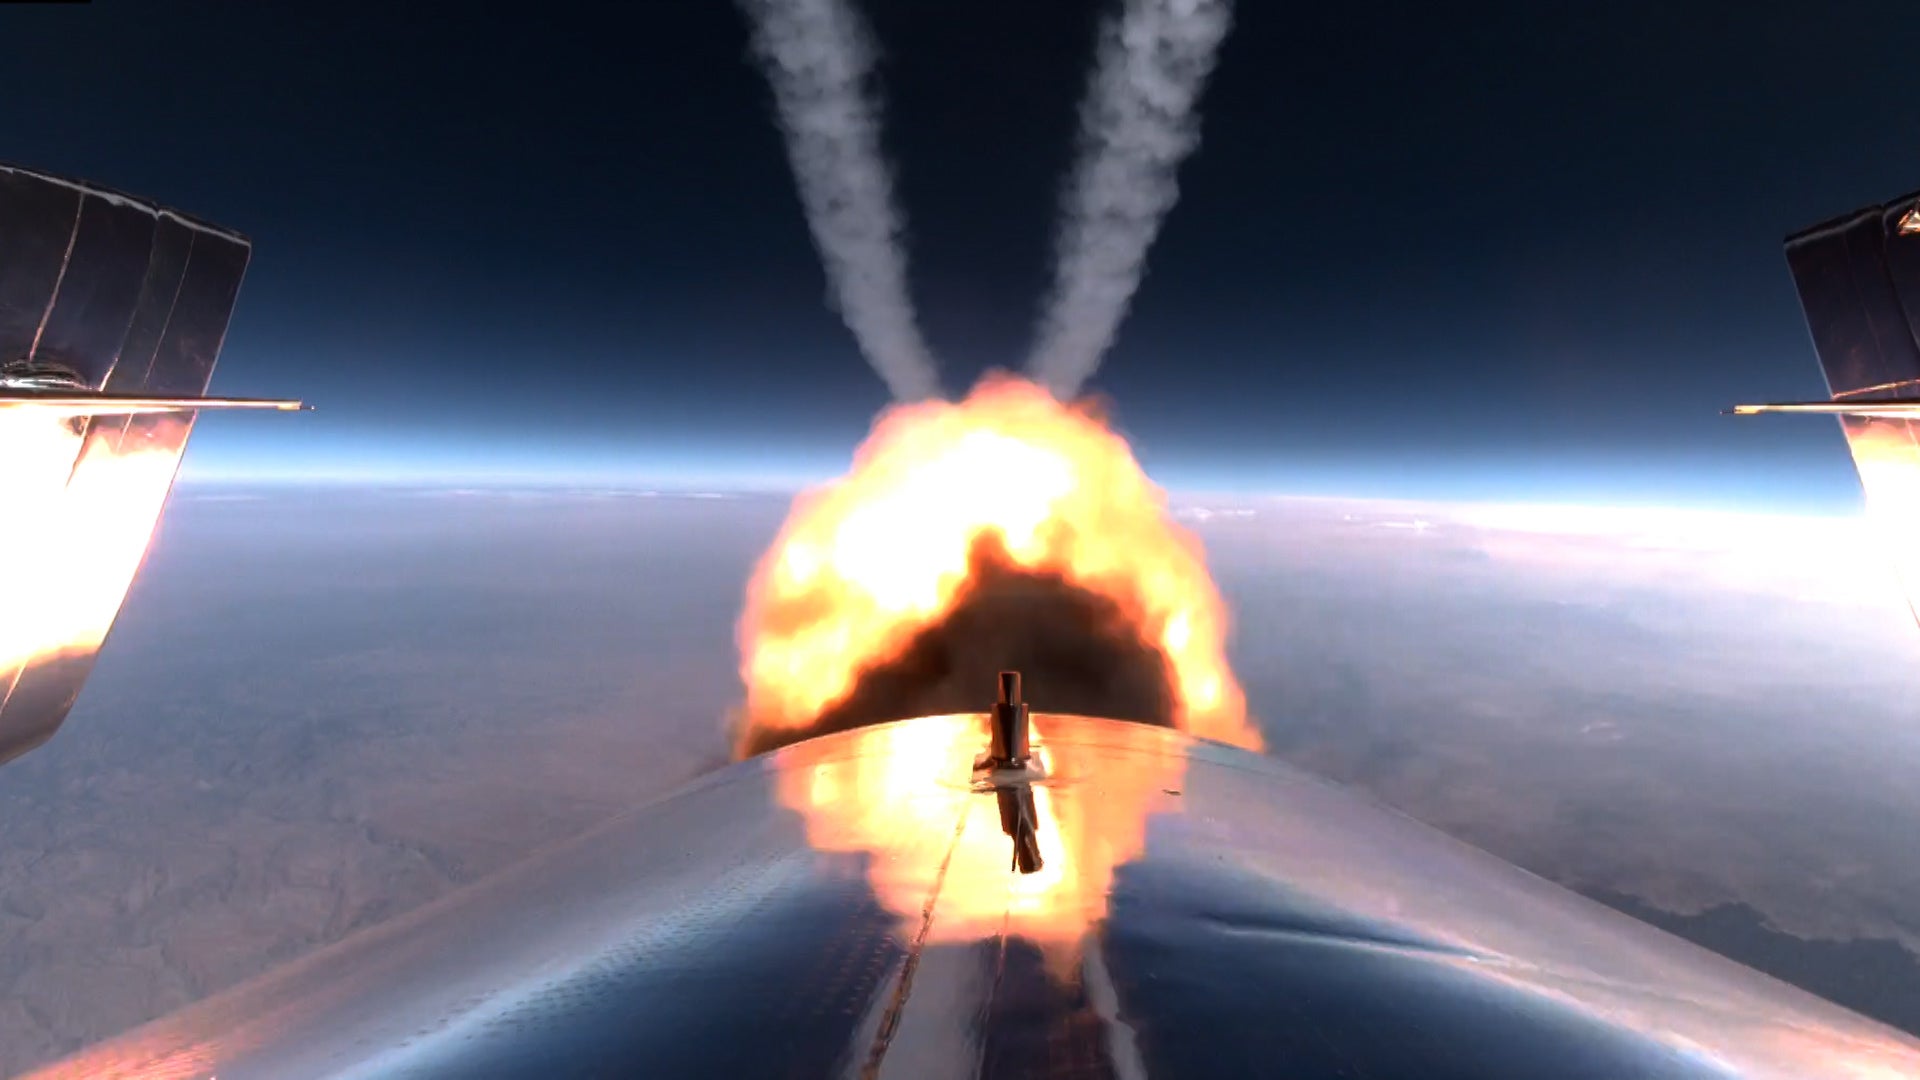 VSS Unity rocket motor burn during the mission.  (Image: Virgin Galactic)